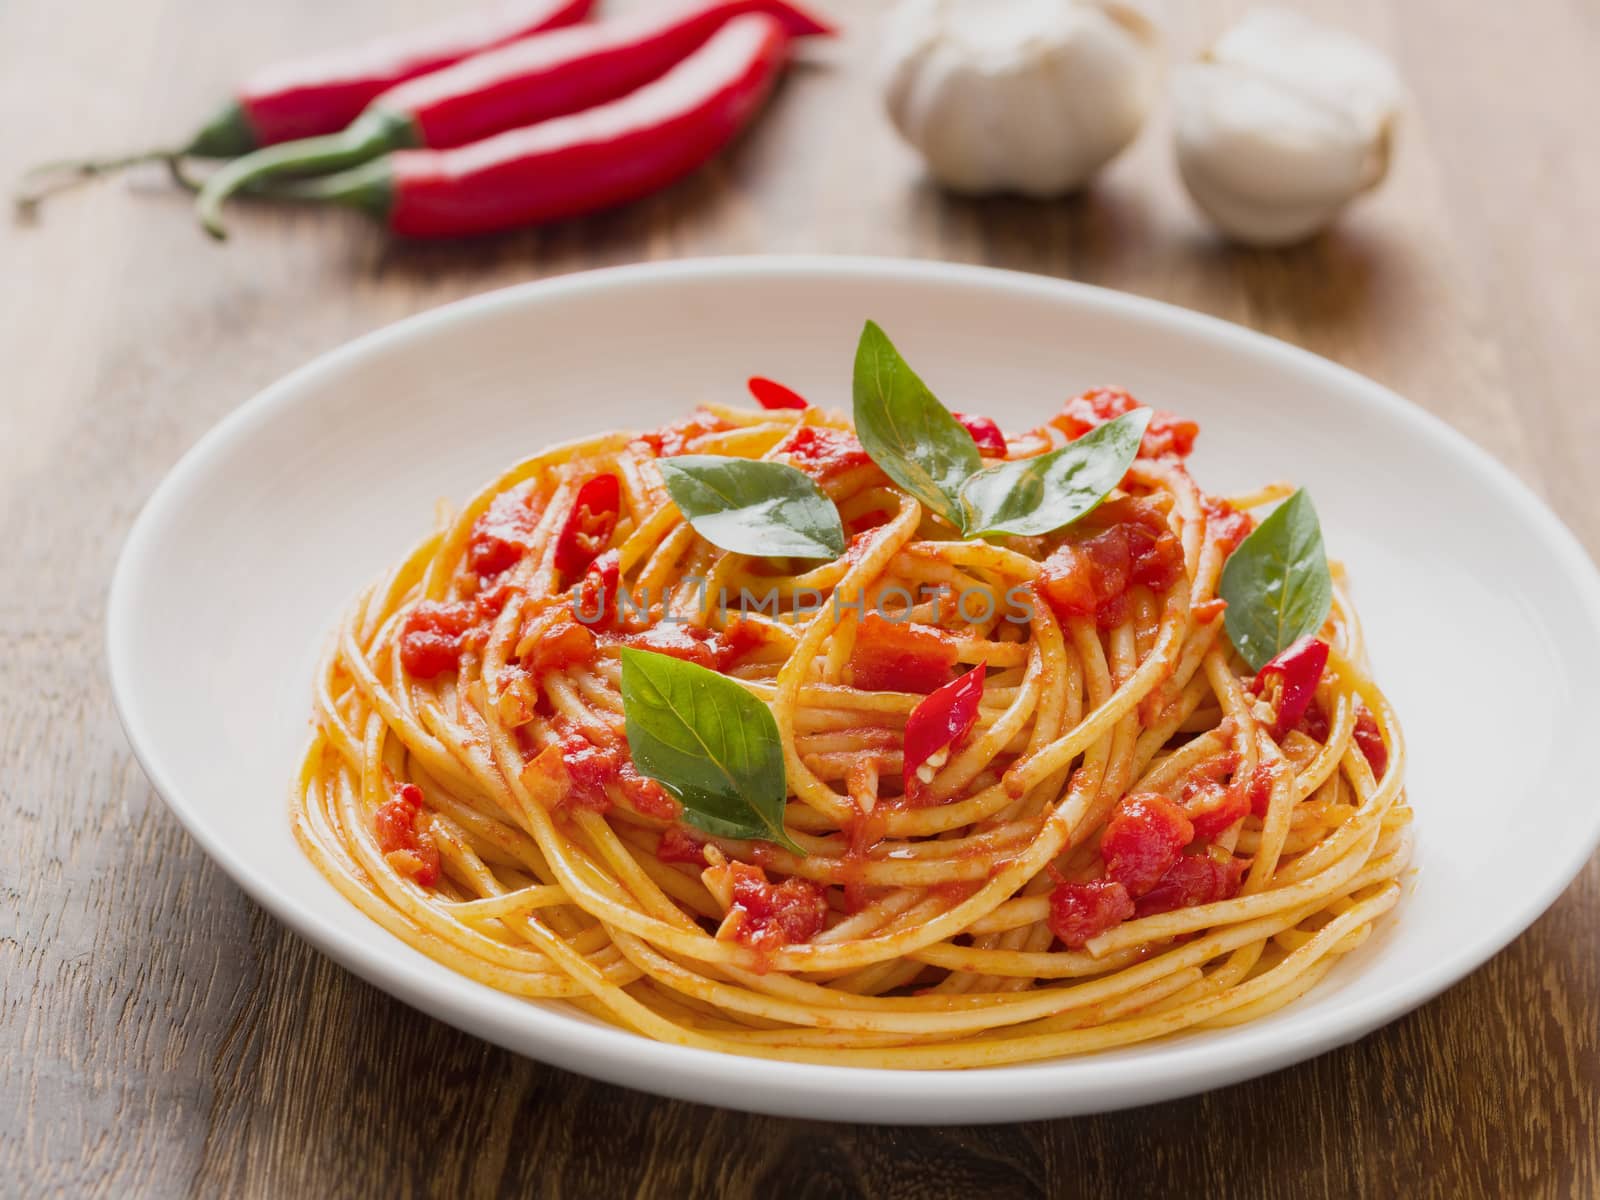 rustic italian spaghetti arrabbiata pasta by zkruger